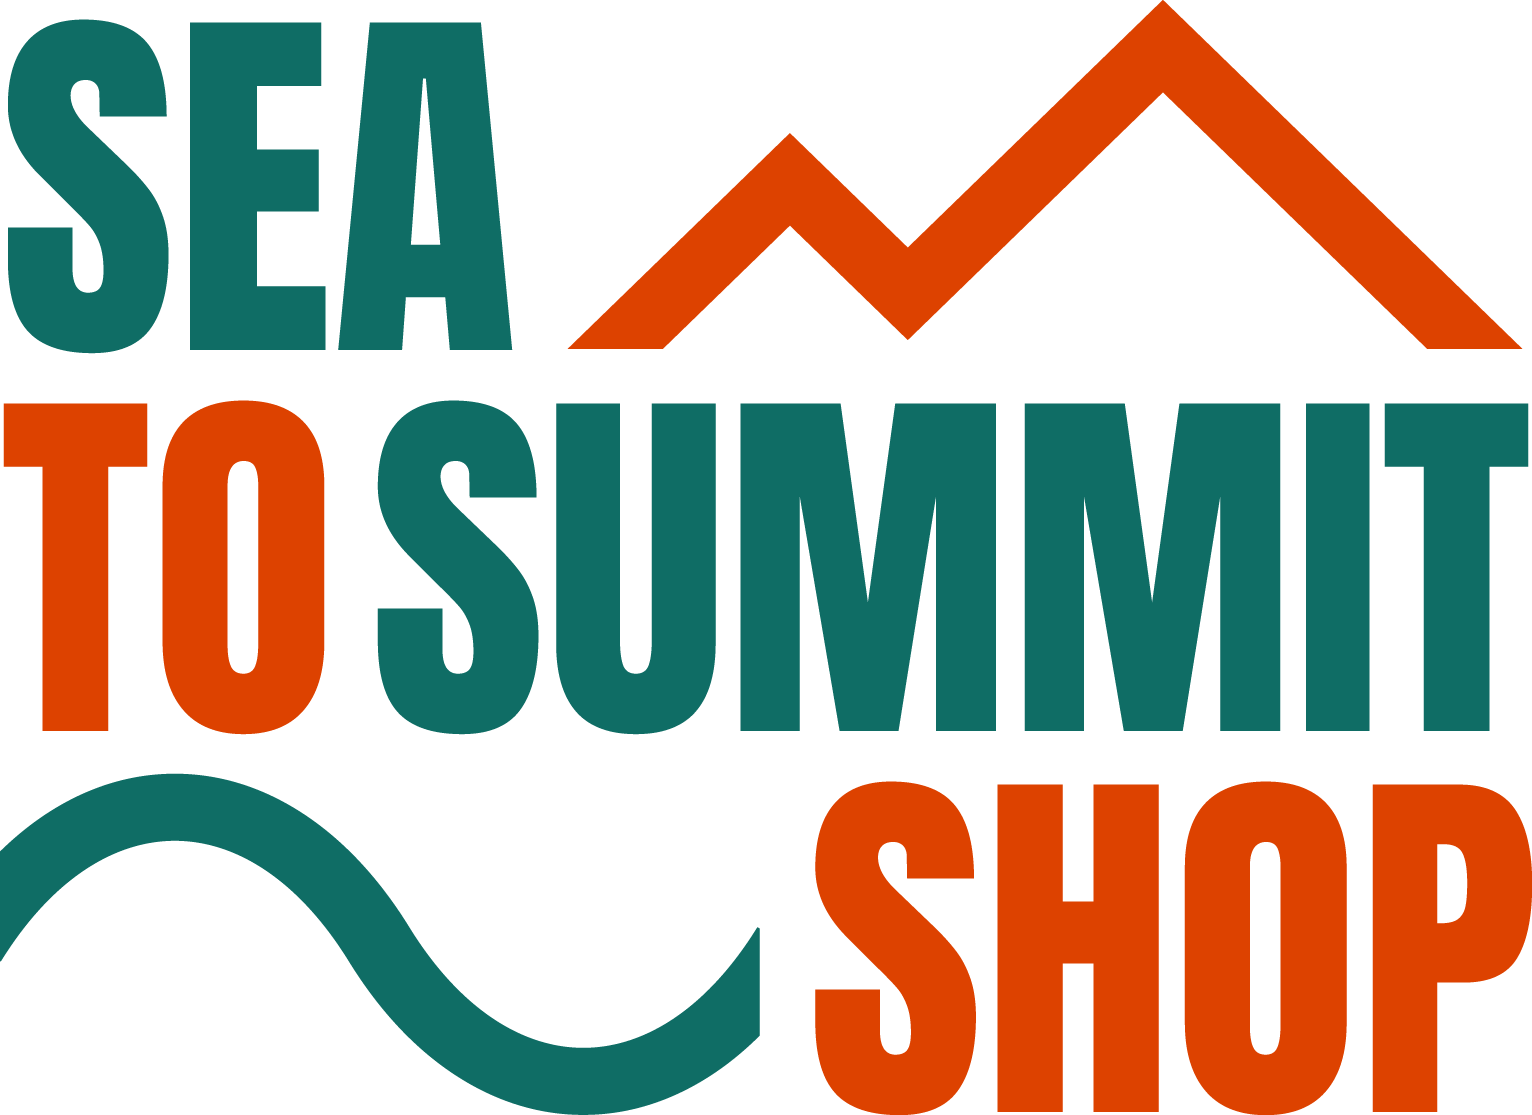 Sea to summit shop sleva 5%